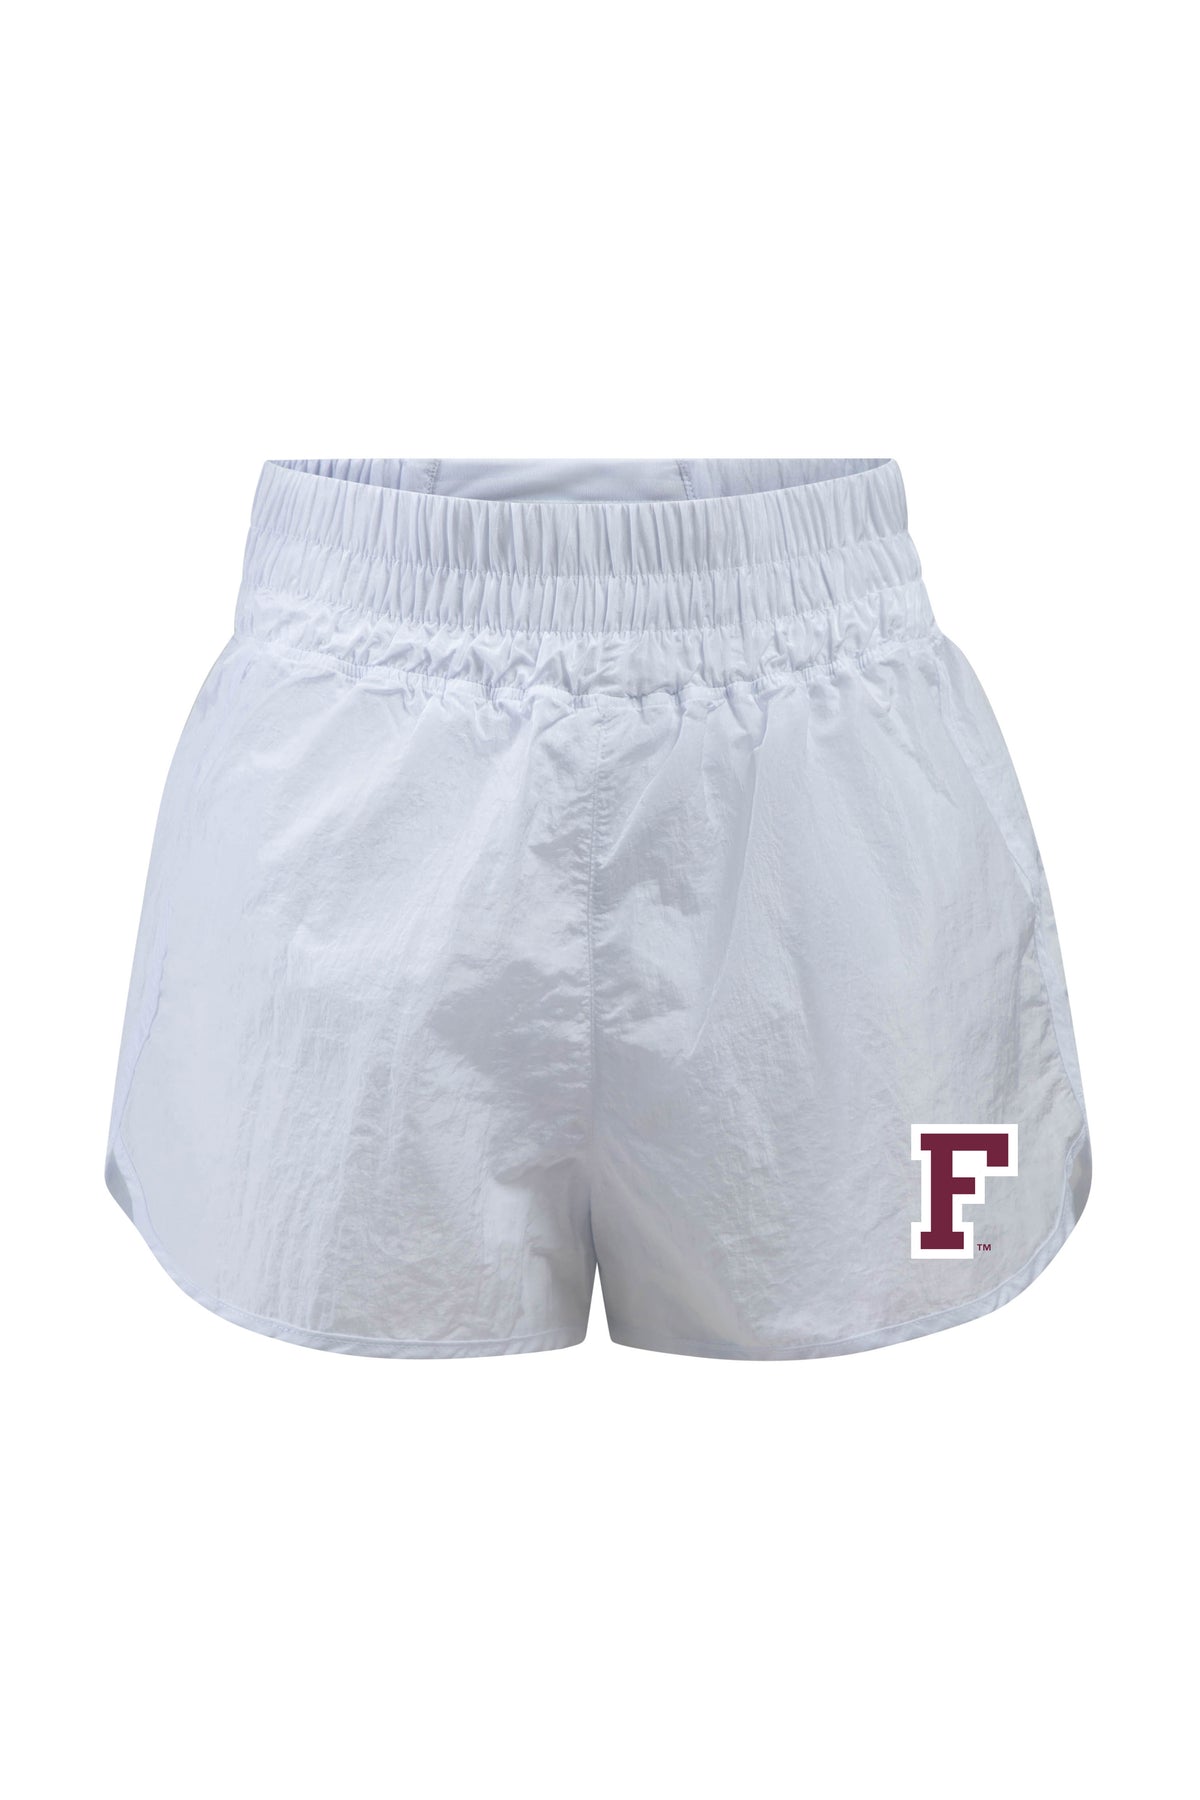 Fordham University Boxer Short